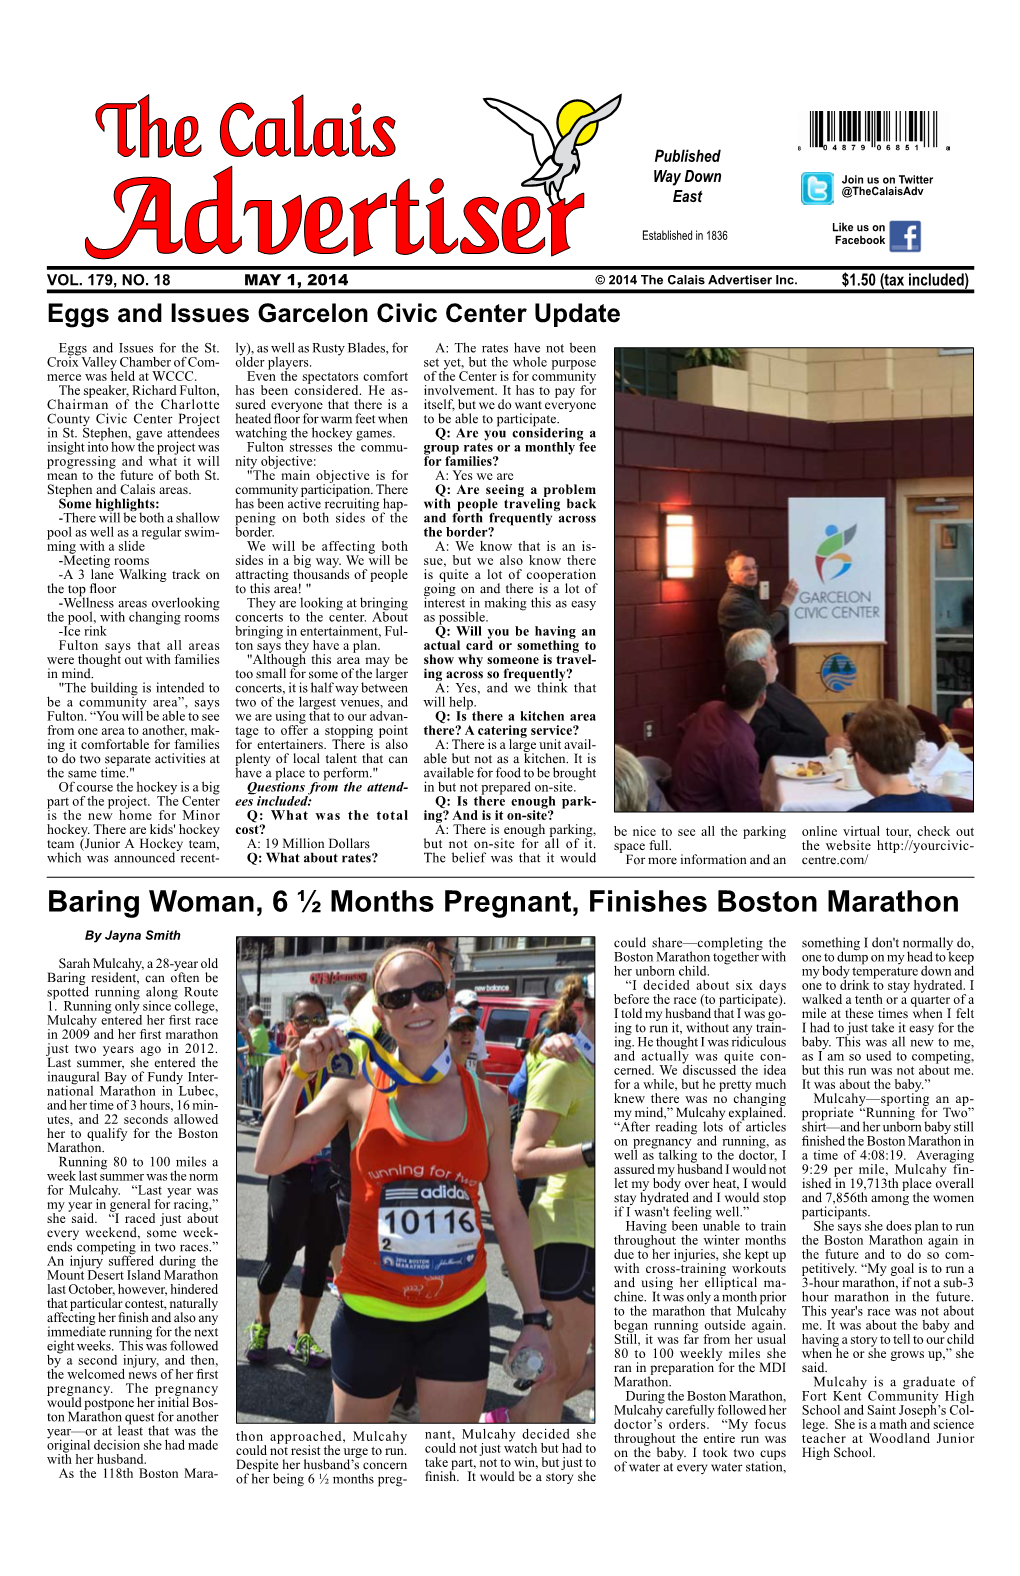 Baring Woman, 6 ½ Months Pregnant, Finishes Boston Marathon